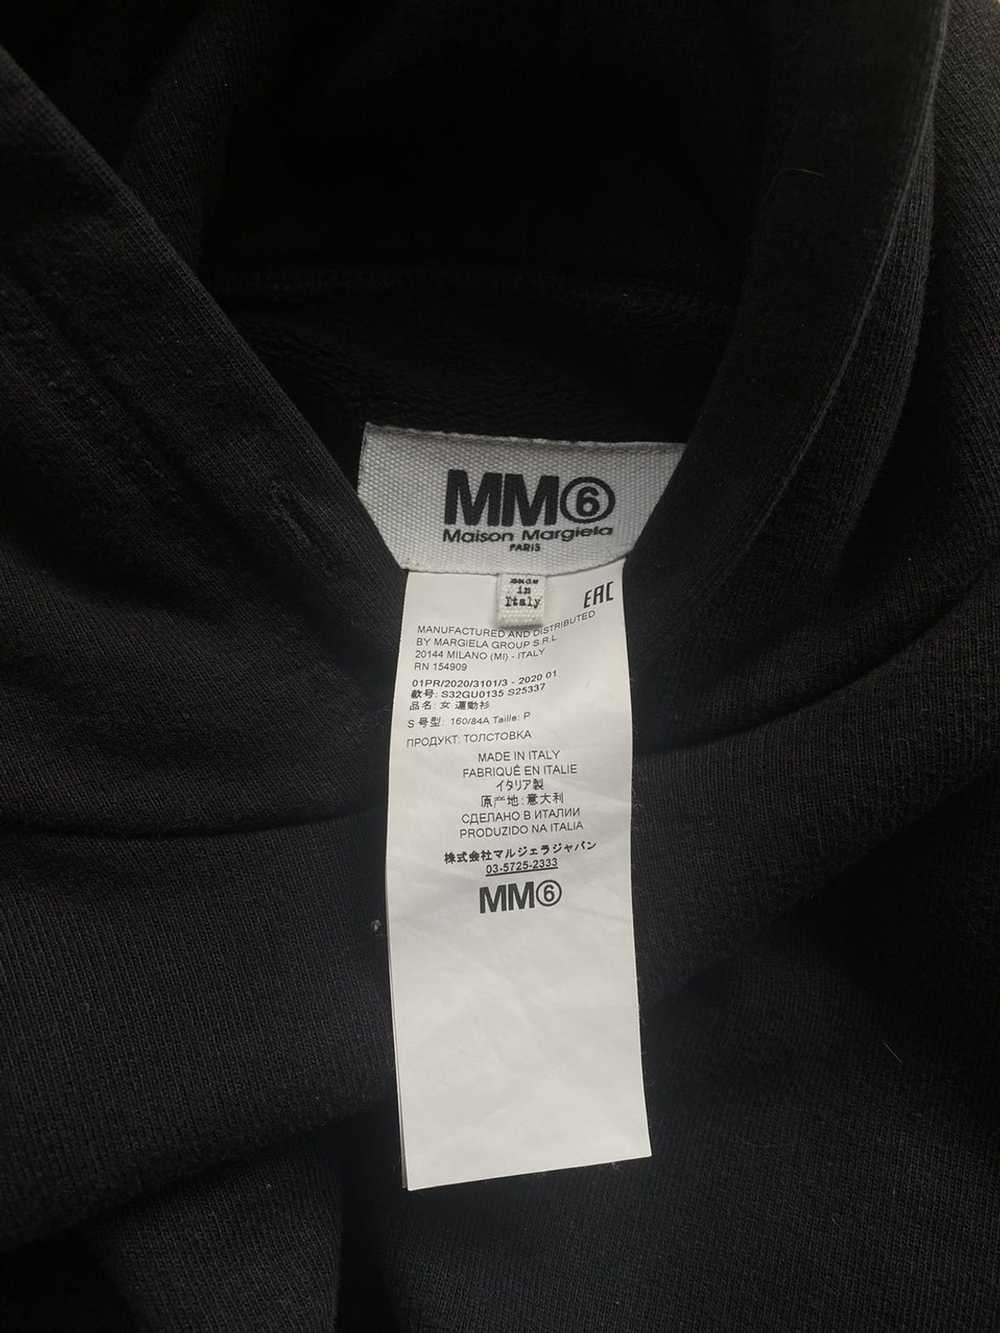 Maison Margiela MM6 hoodie with backprint - image 4